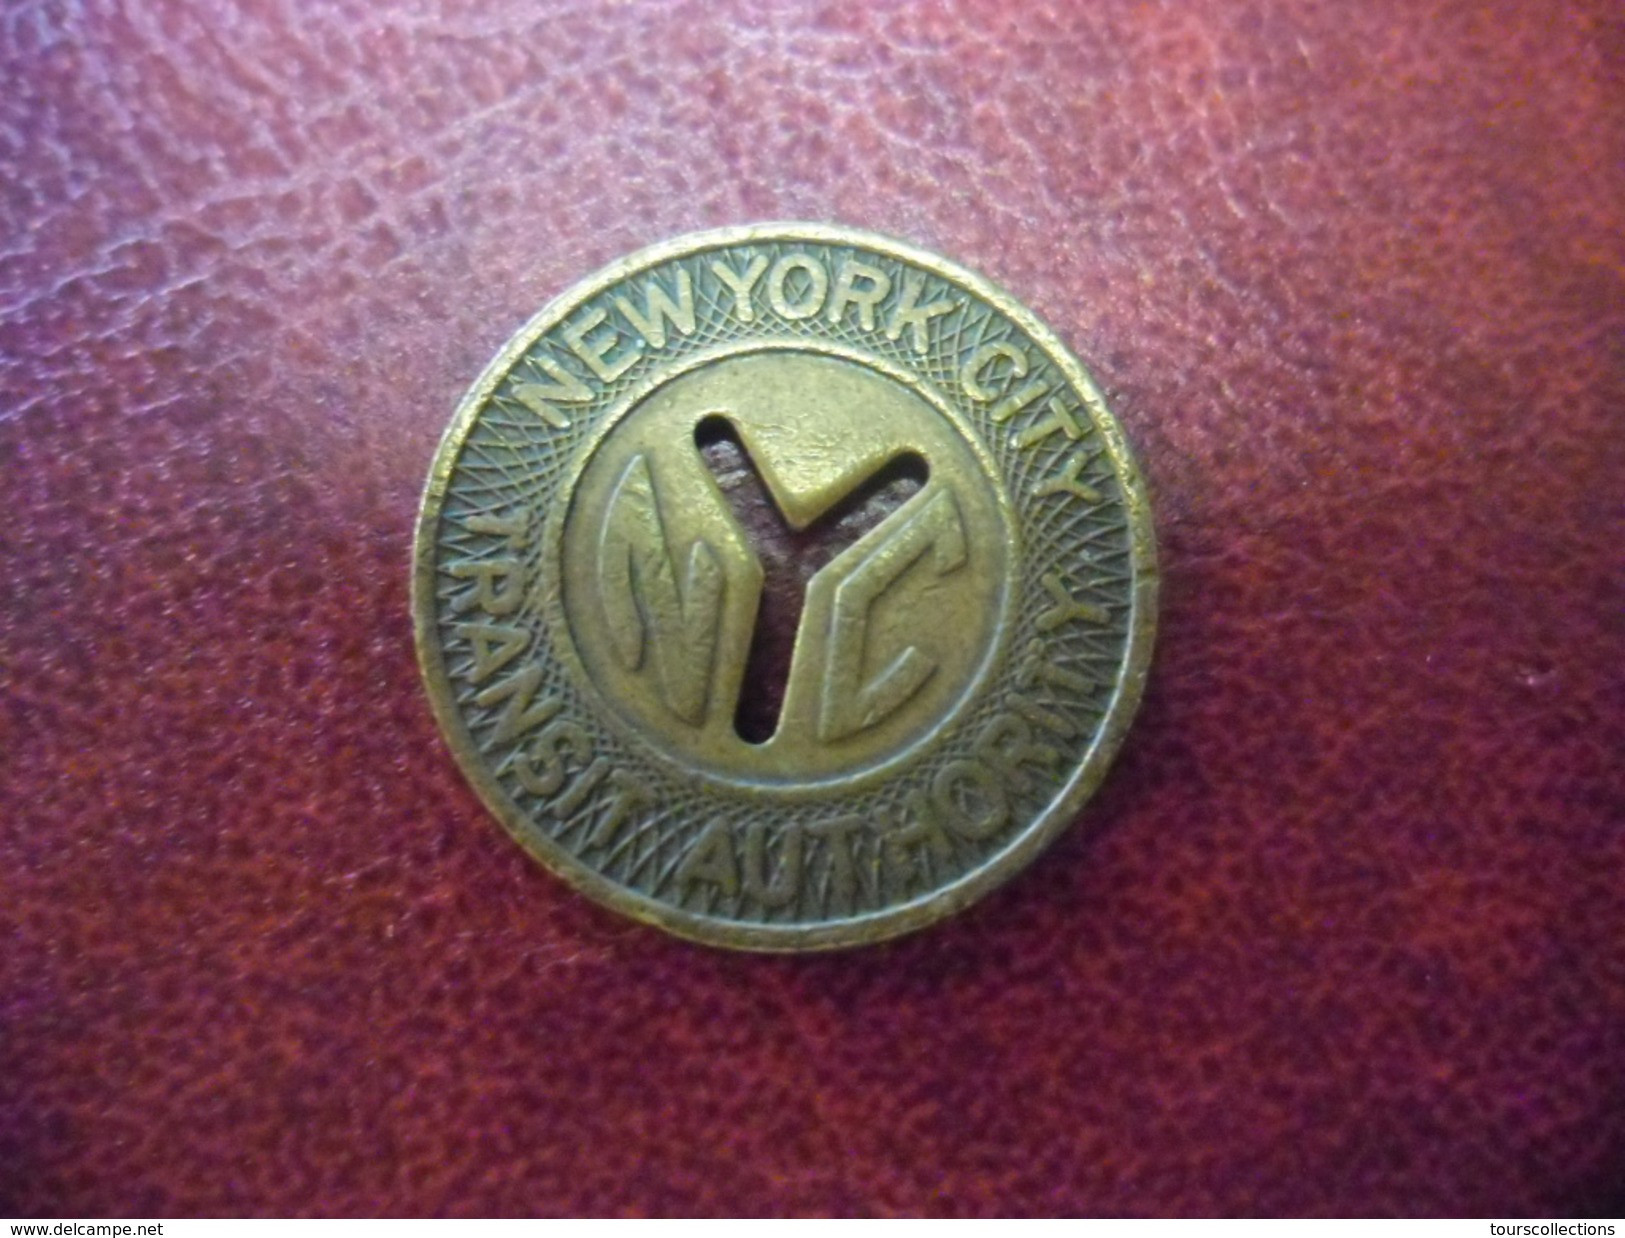 JETON New York City, New York Transit Authority One Fare Transit Token - Subway Métro Vers 1953 à 1970 - Monetary/Of Necessity